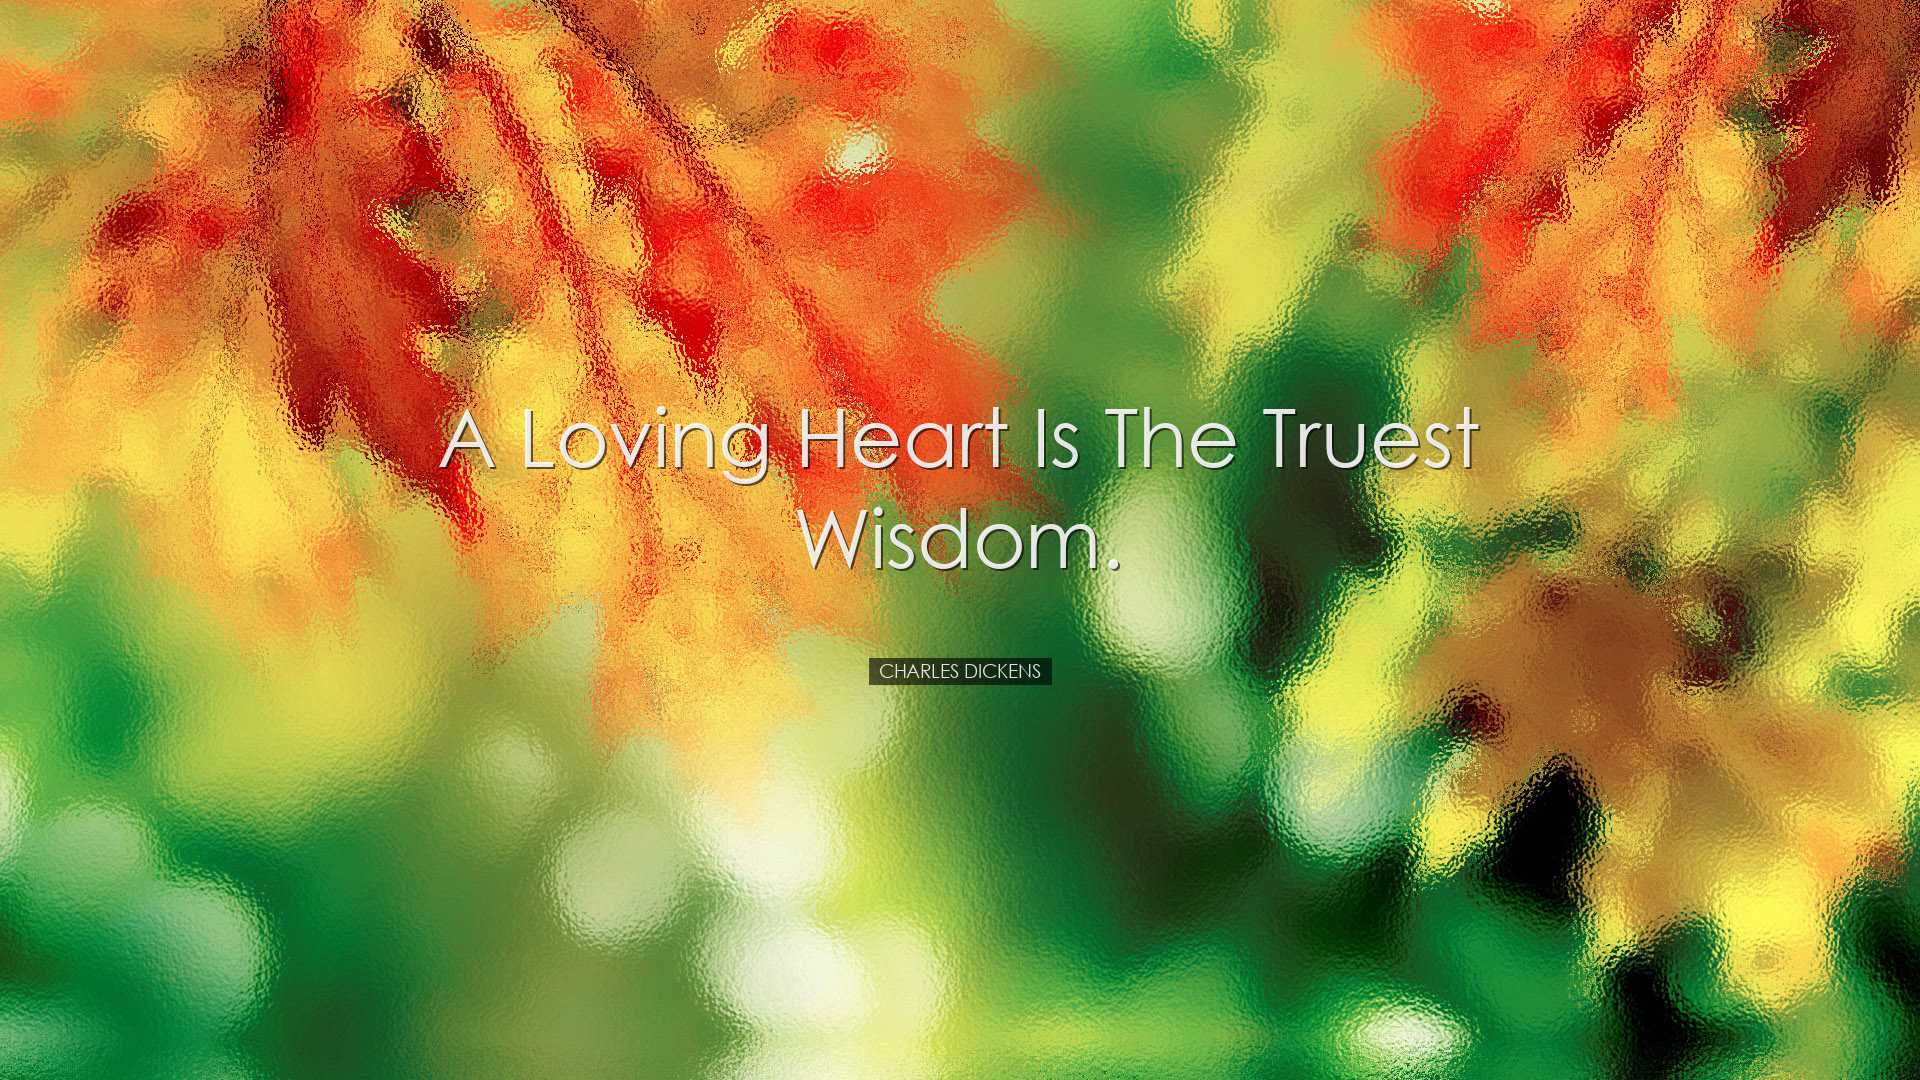 A loving heart is the truest wisdom. - Charles Dickens